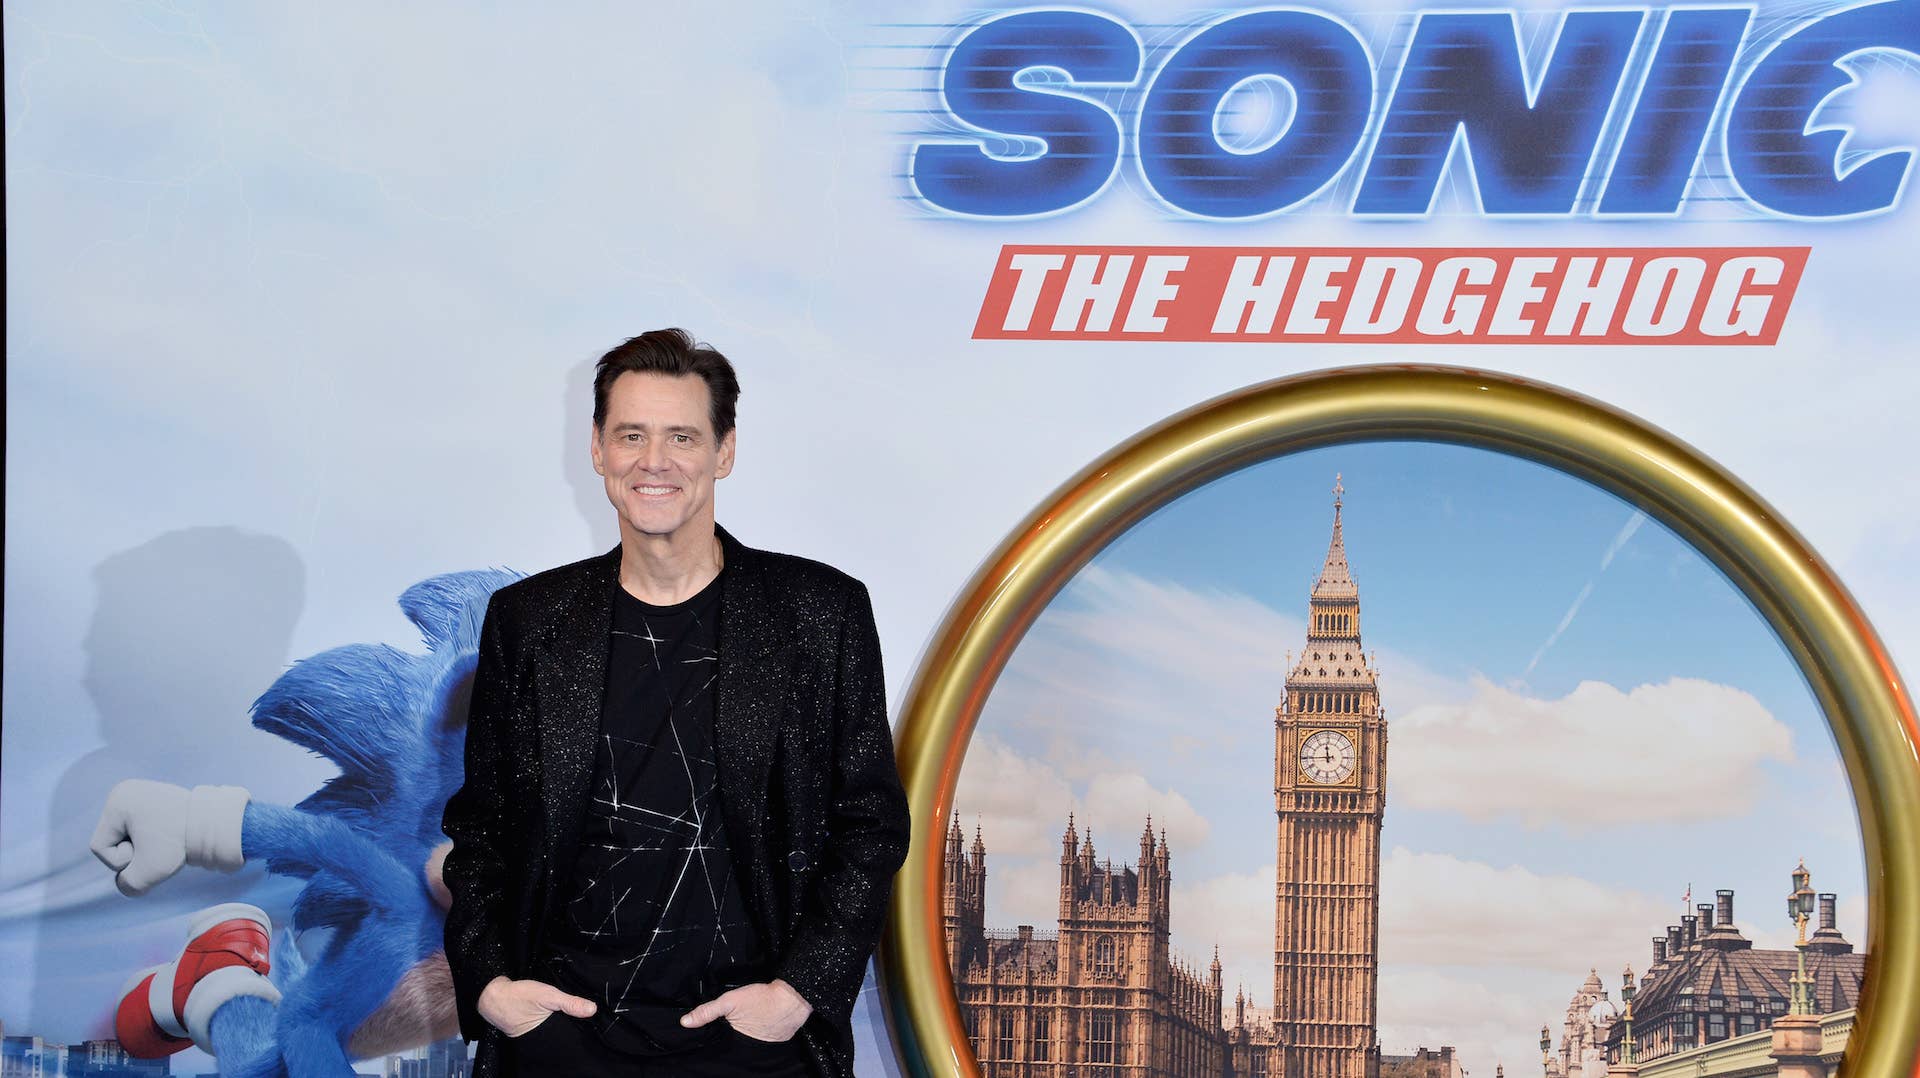 Jim Carrey attends the "Sonic the Hedgehog" London Fan Screening